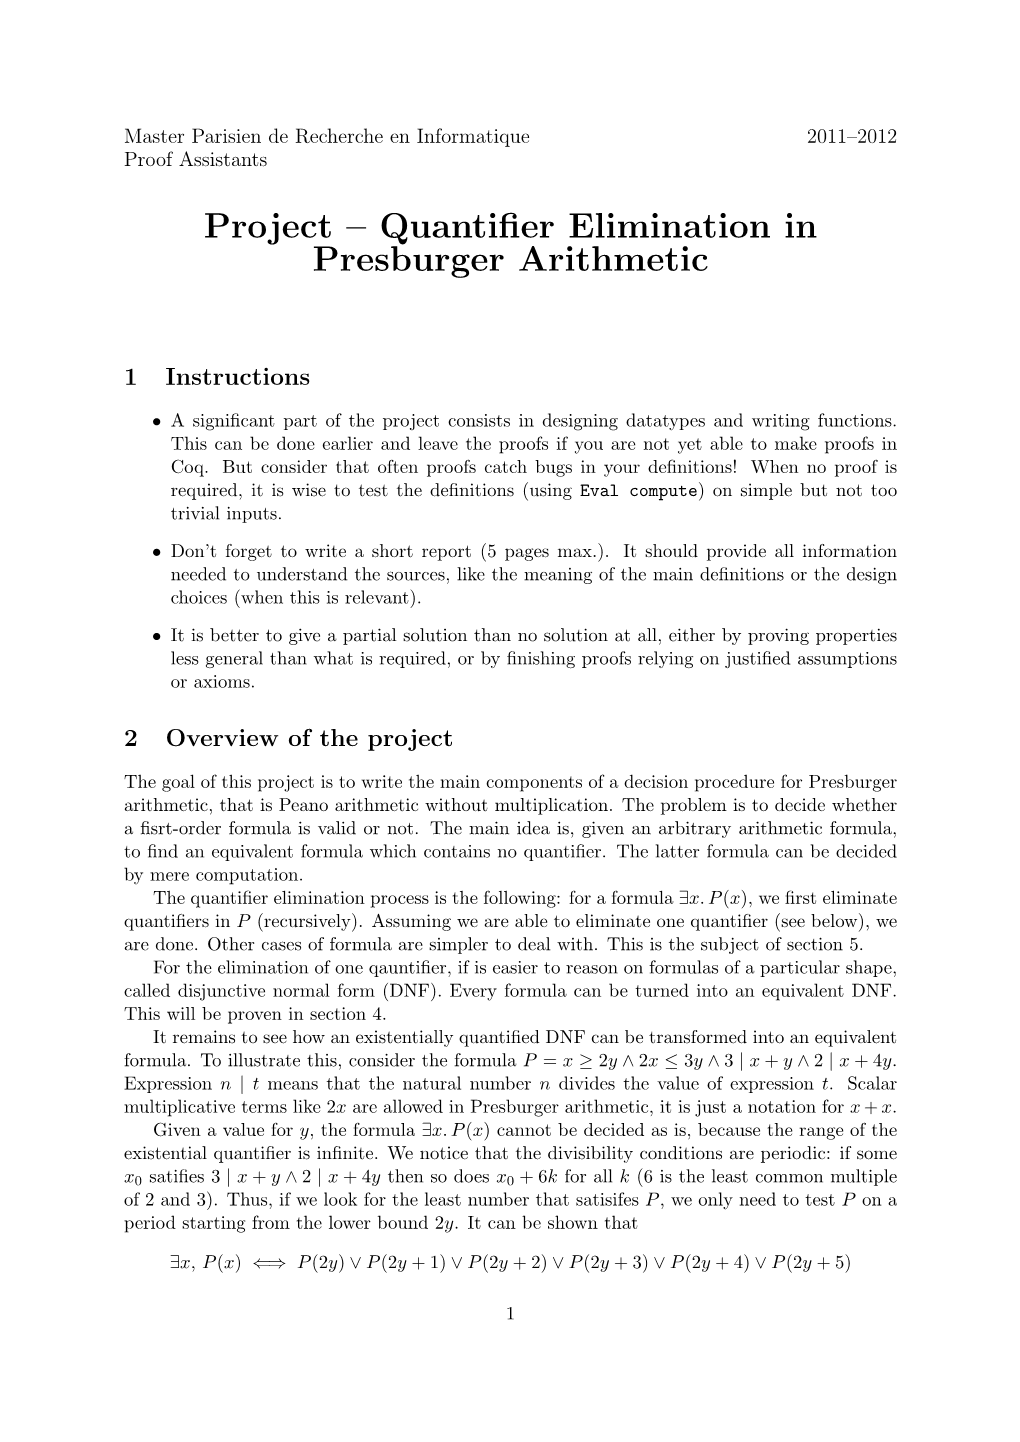 Quantifier Elimination in Presburger Arithmetic